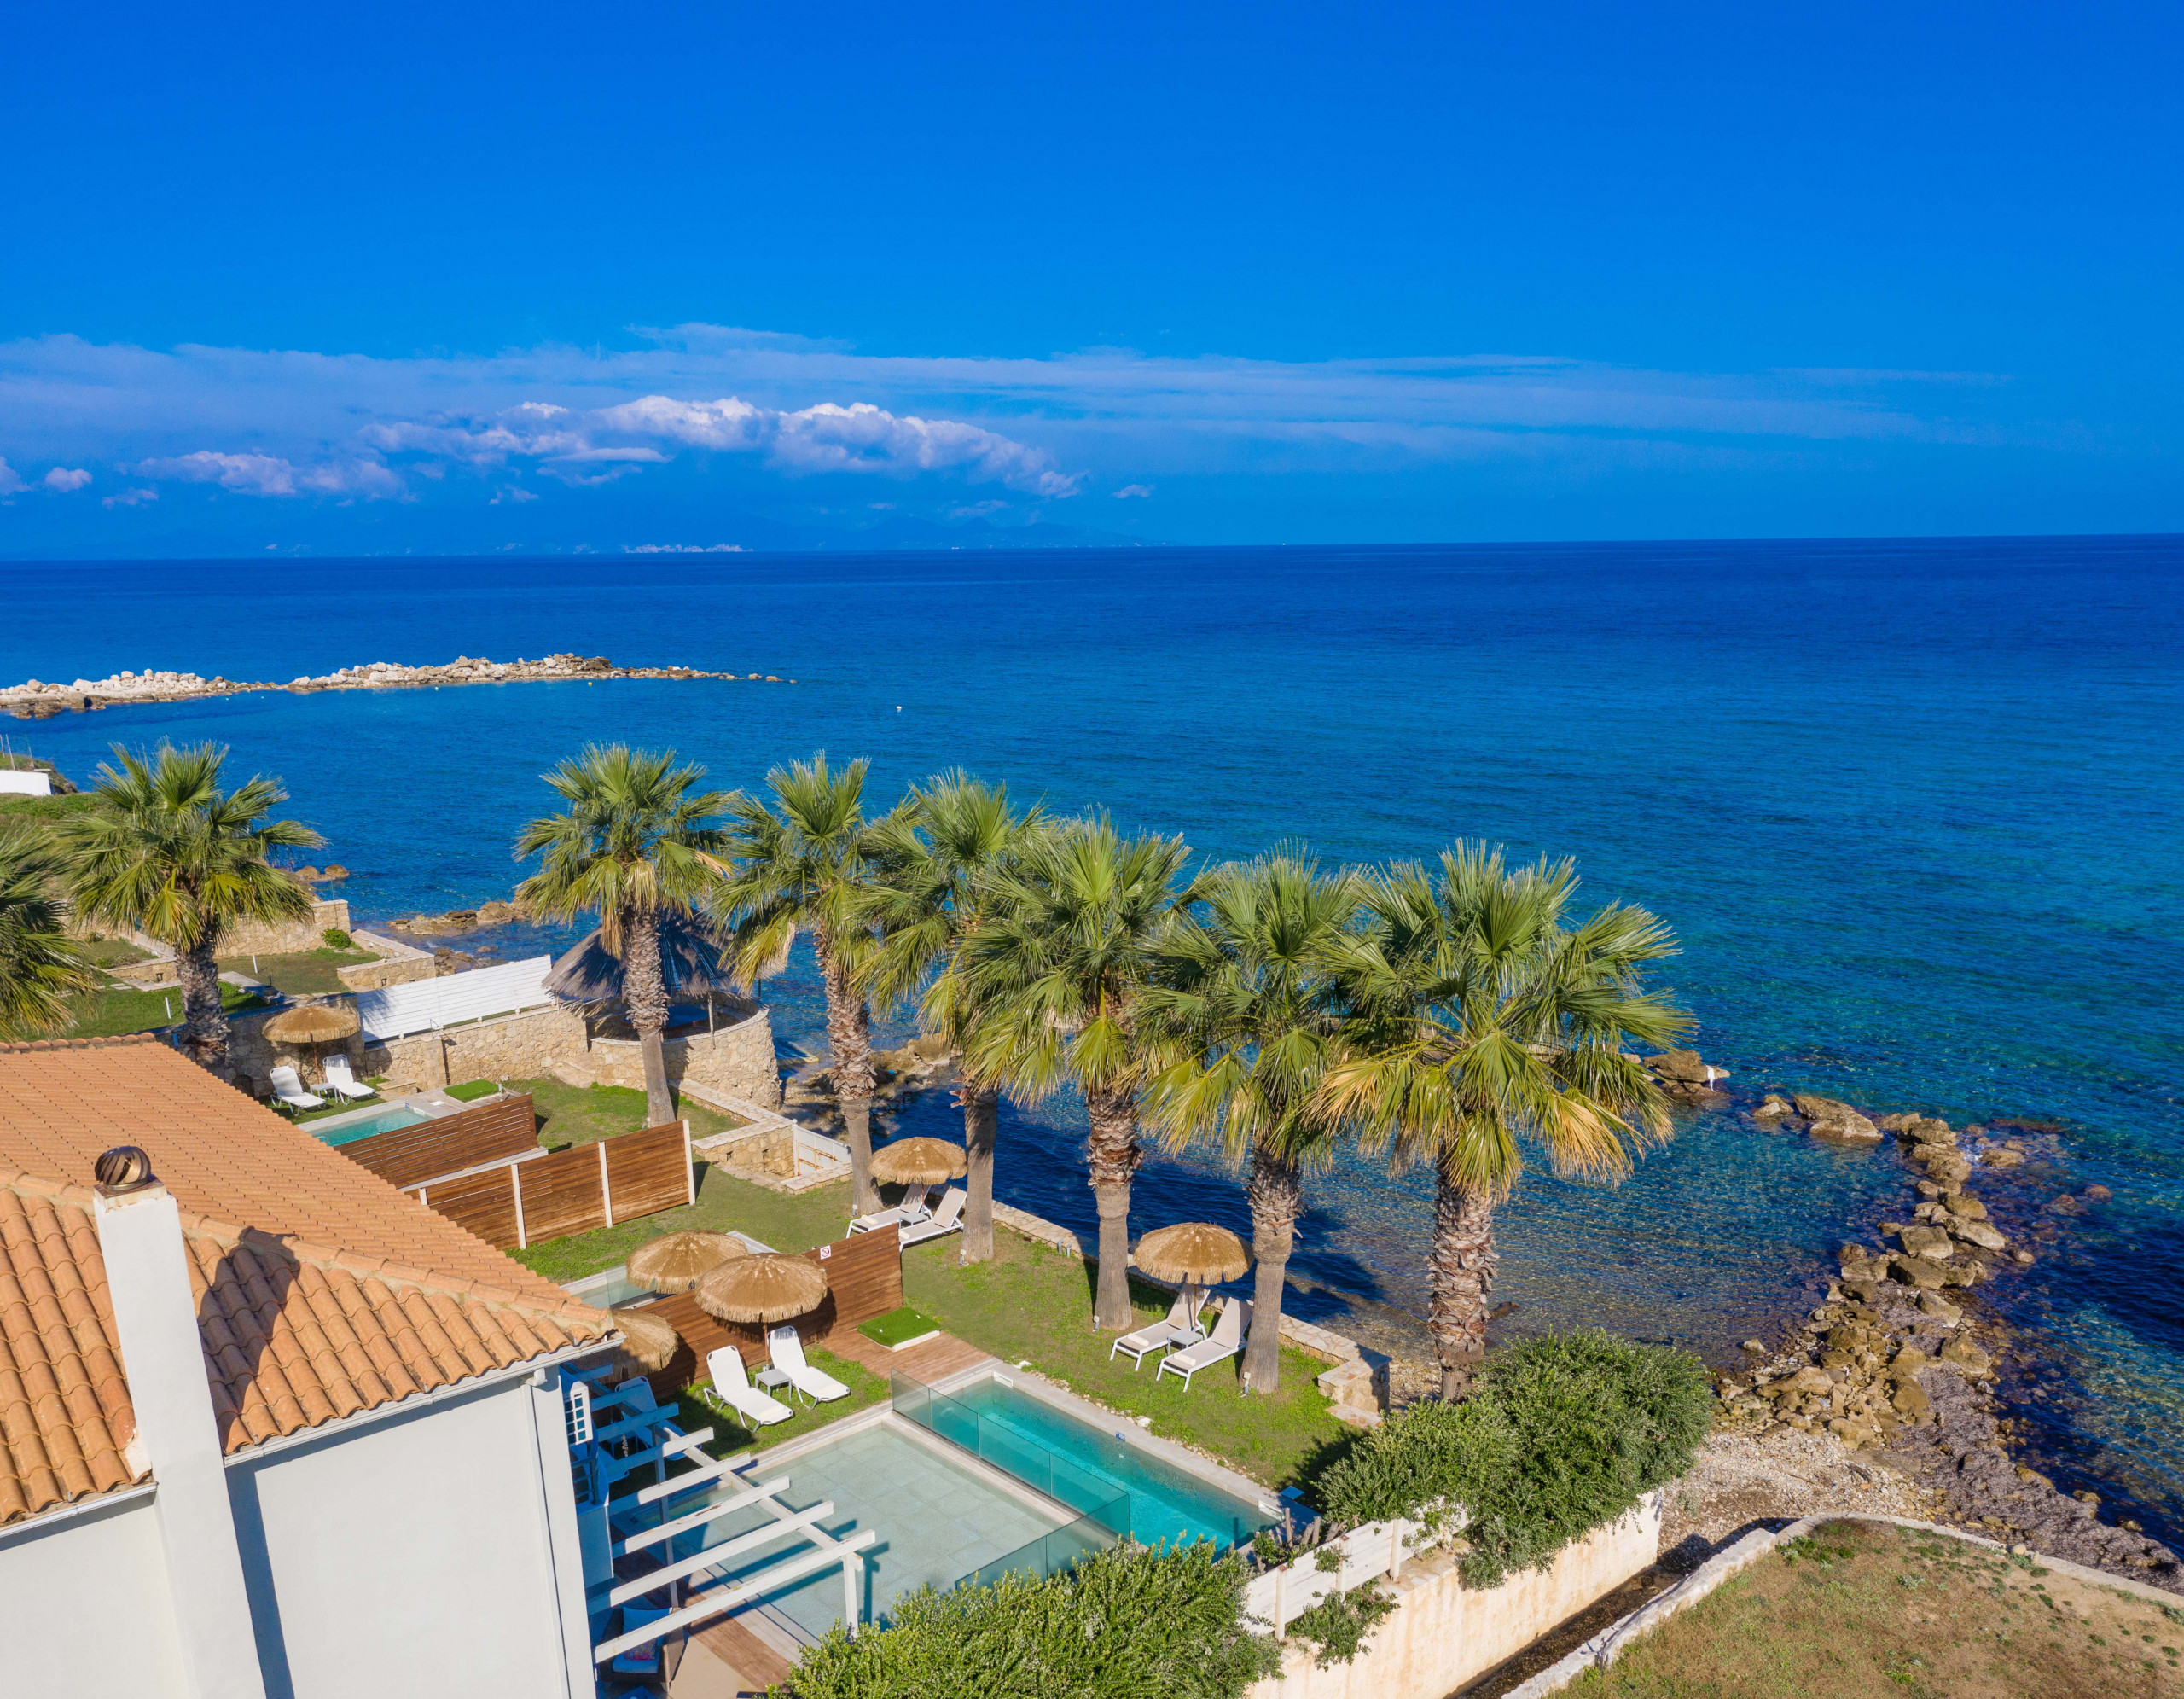 Gaia Deluxe SeaFront Villa, Pool & Beach Access